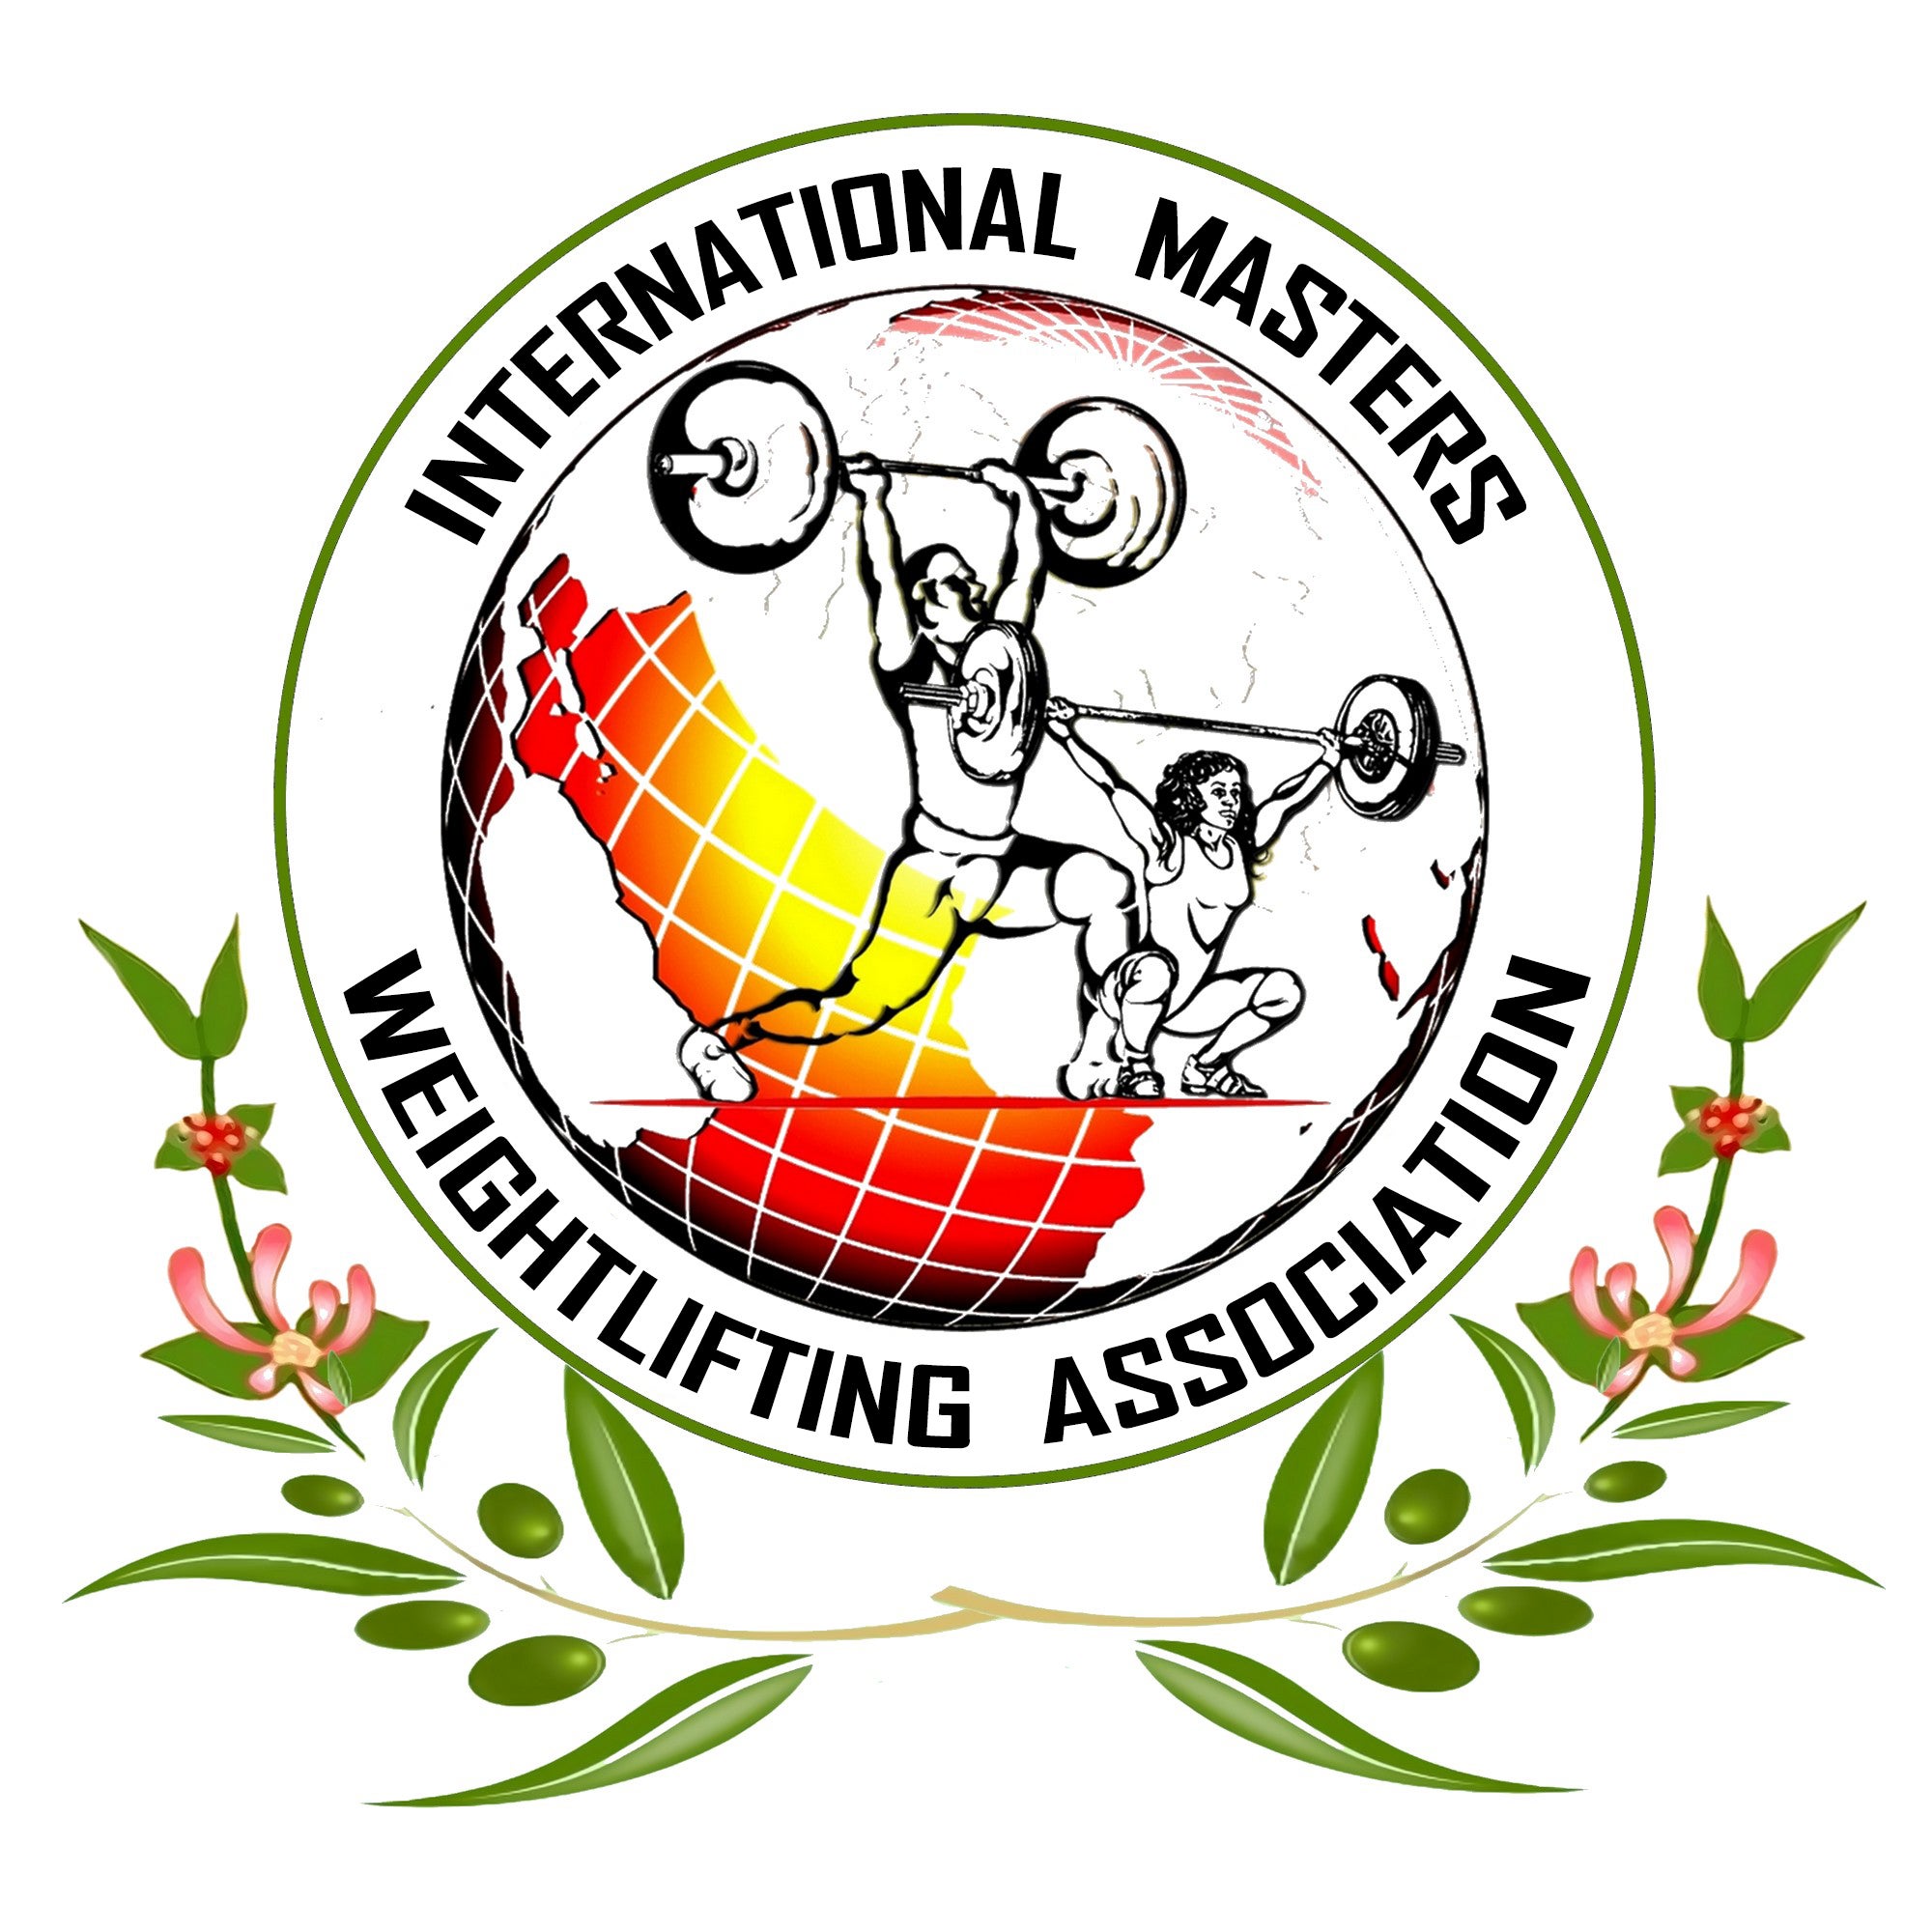 WNM World Nails Master - Championship